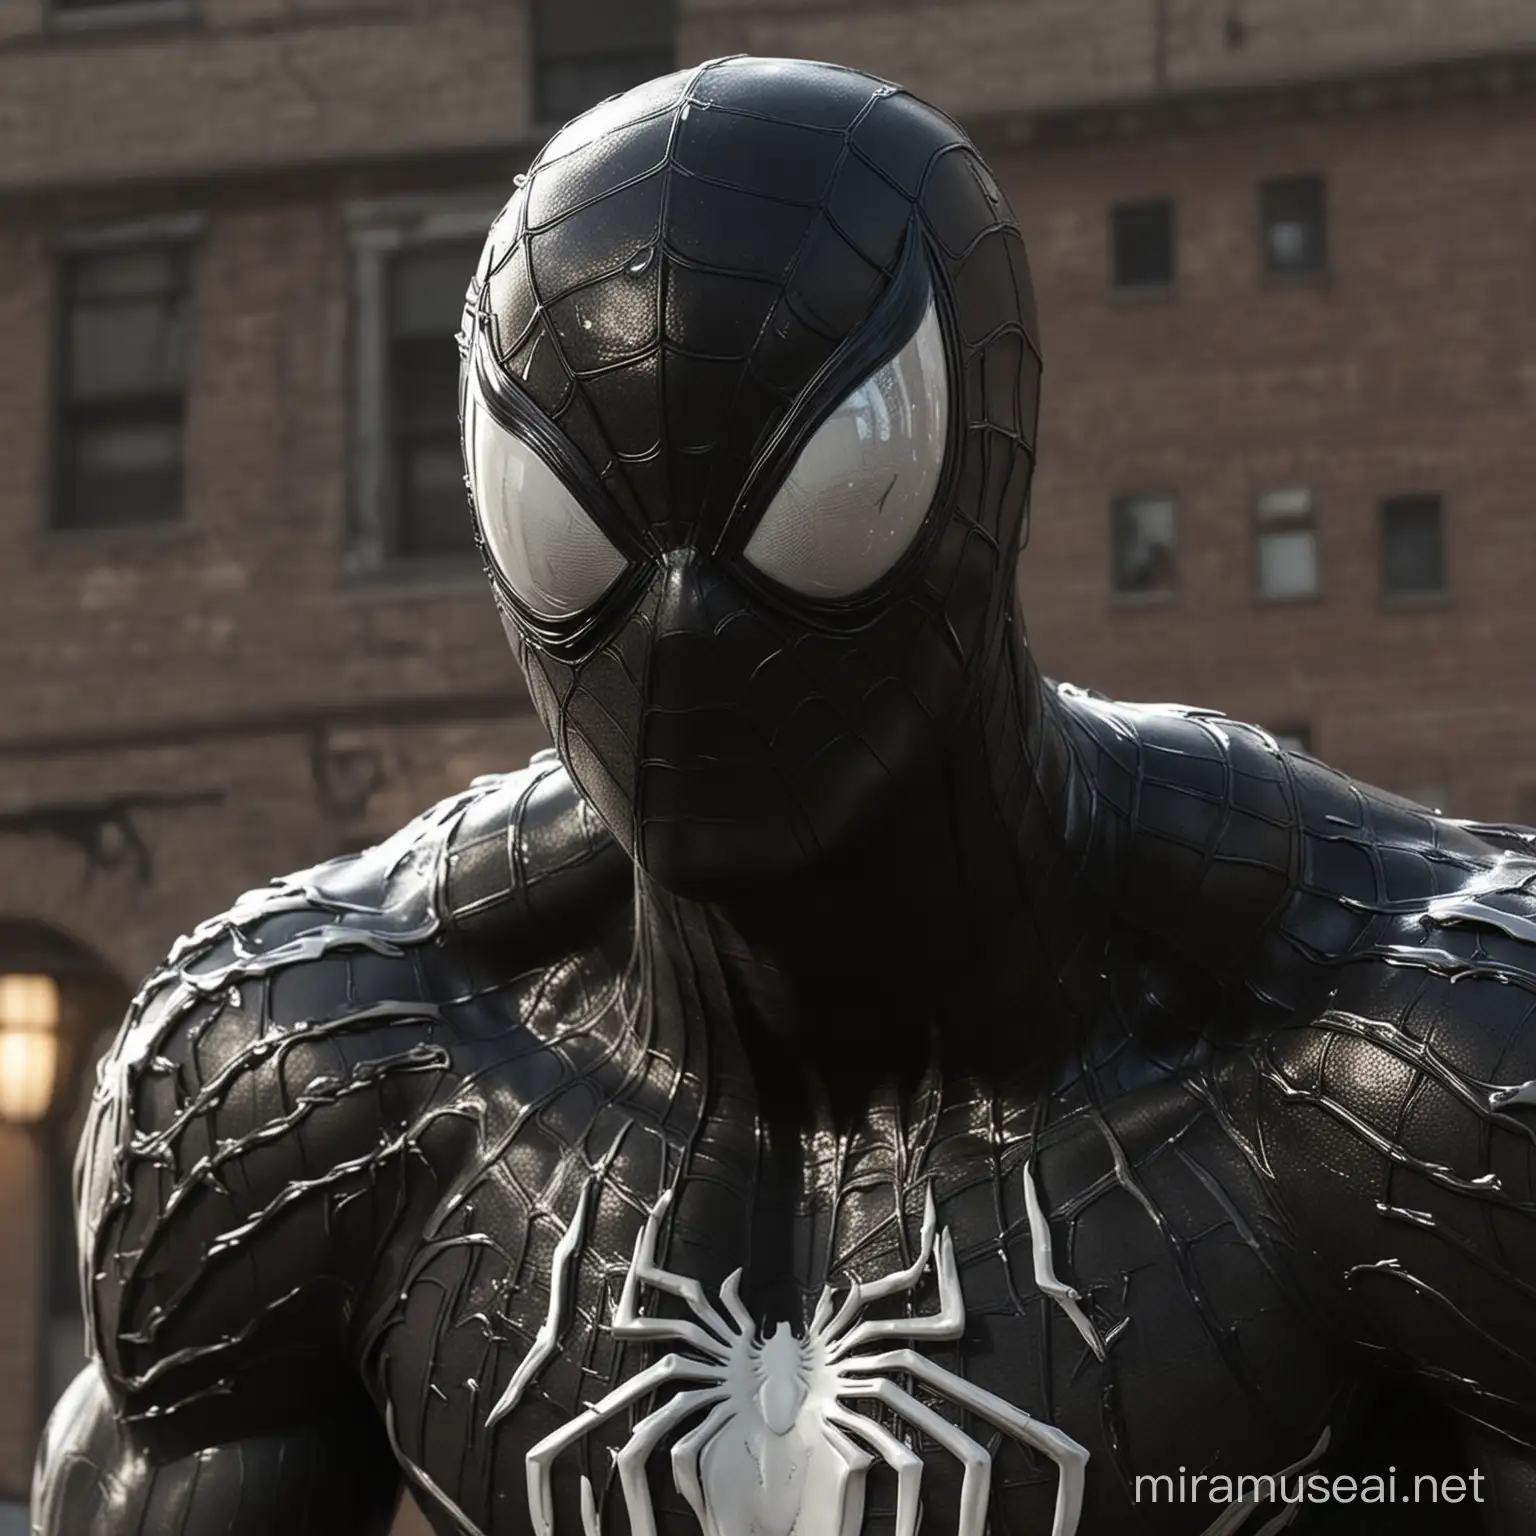 spiderman after getting the venom symbiote